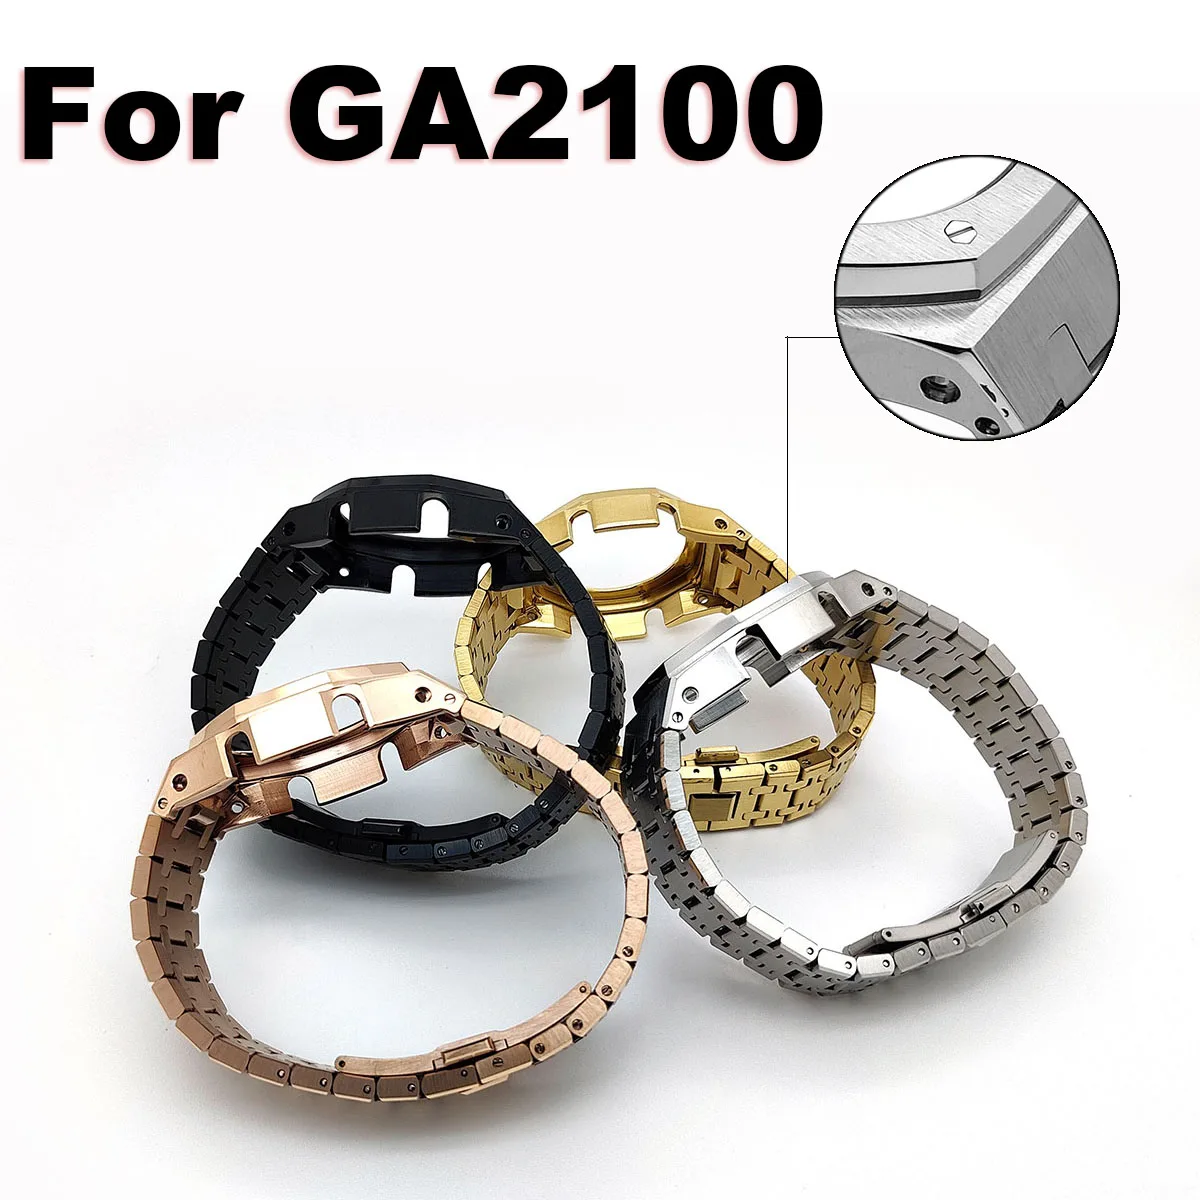 

GA2100 Metal Watch Strap Mod for CasiOak 3rd Generation GA2110 Watchband Bezel for Casio G-Shock GA-2100 Stainless Steel Belt